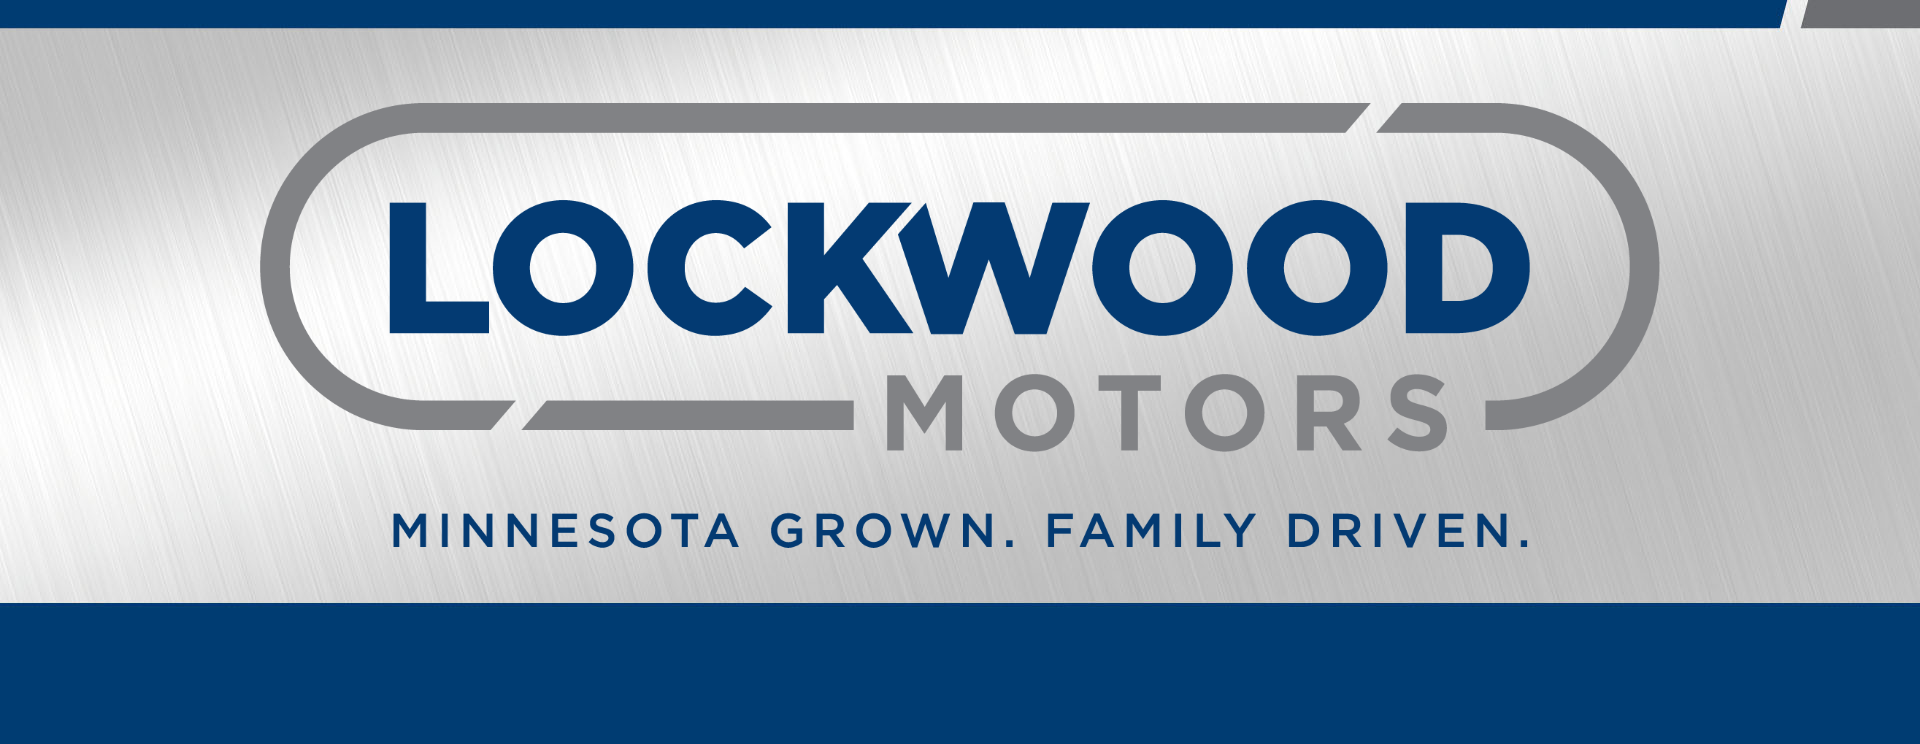 Lockwood Motors